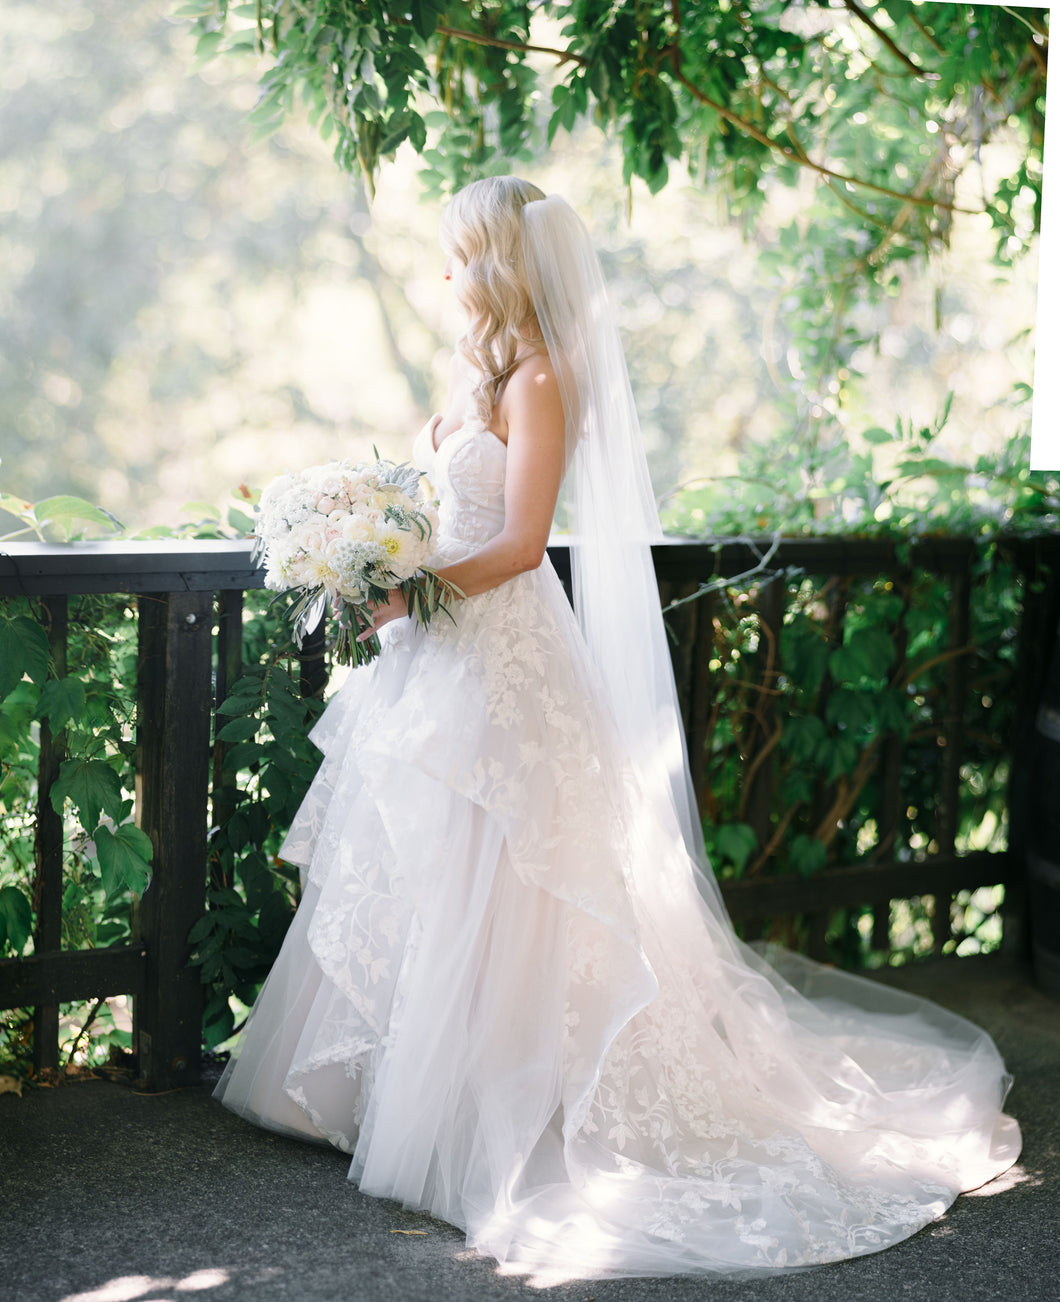 Hayley Paige 'Lulu' size 10 used wedding dress side view on bride